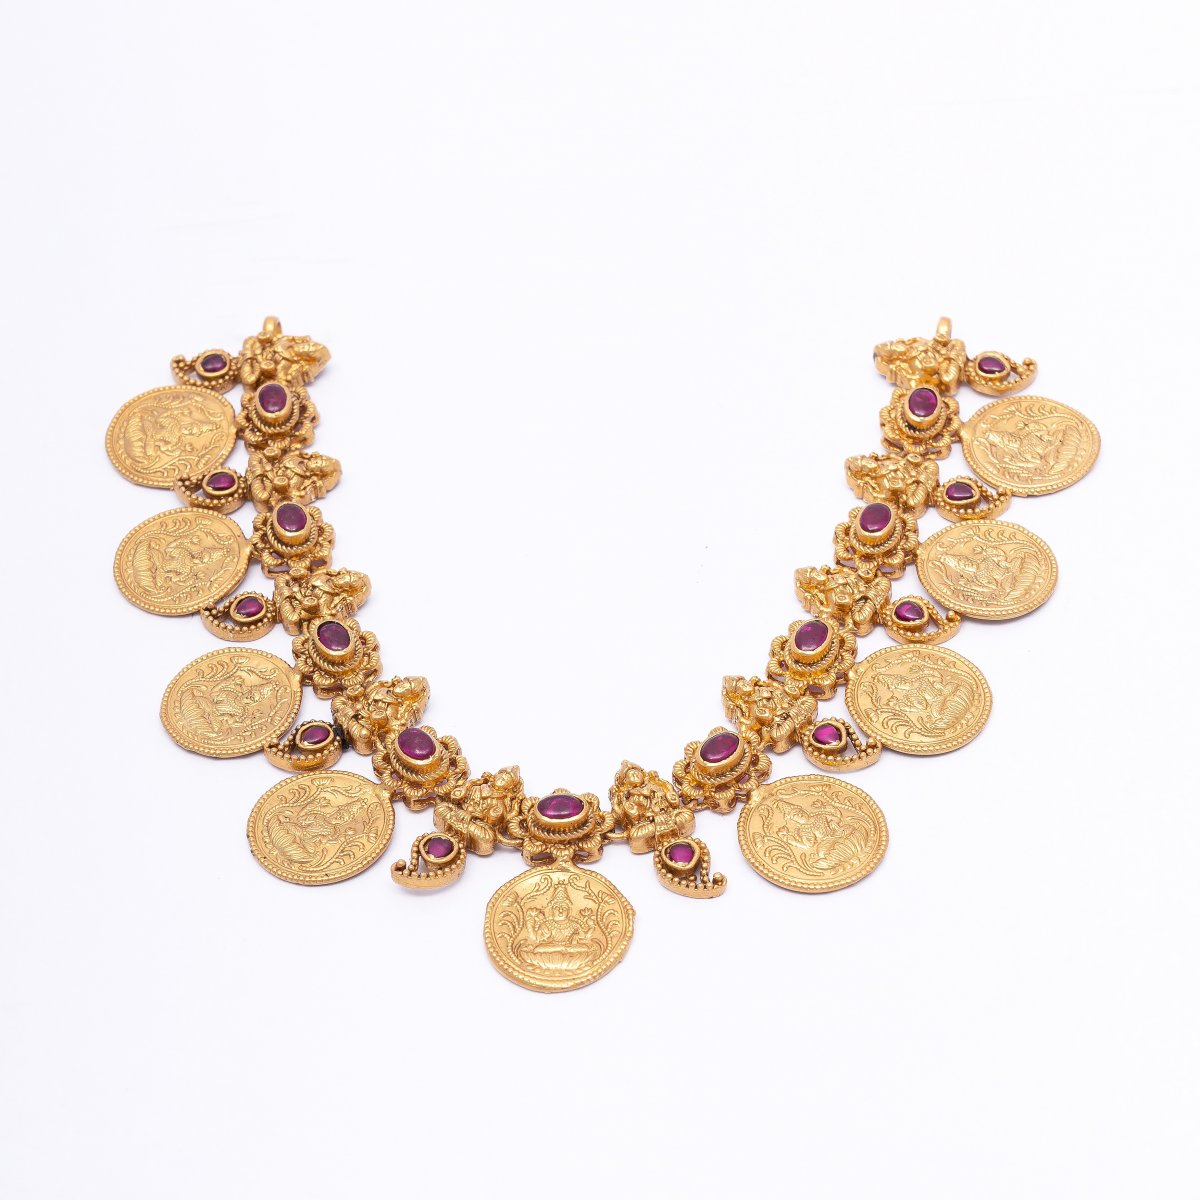 NCKN19 - Gold Plated Lakshmi Coin Necklace American Diamond Stone Atti (Choker) Temple Jewelry